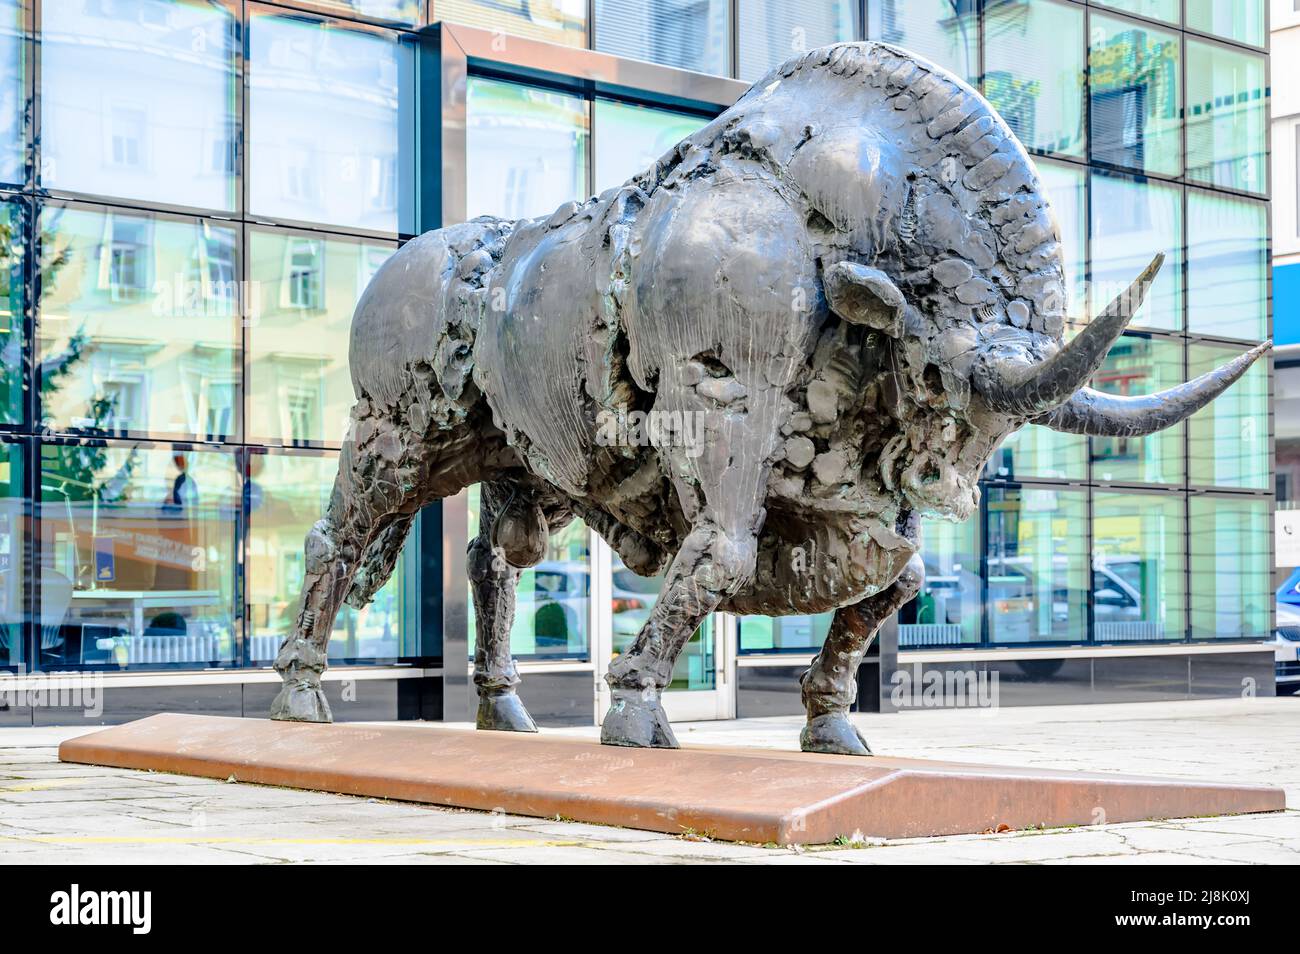 LJUBLJANA, SLOVENIA - FEBRUARY 15, 2022: A large bronze bull sculpture ...